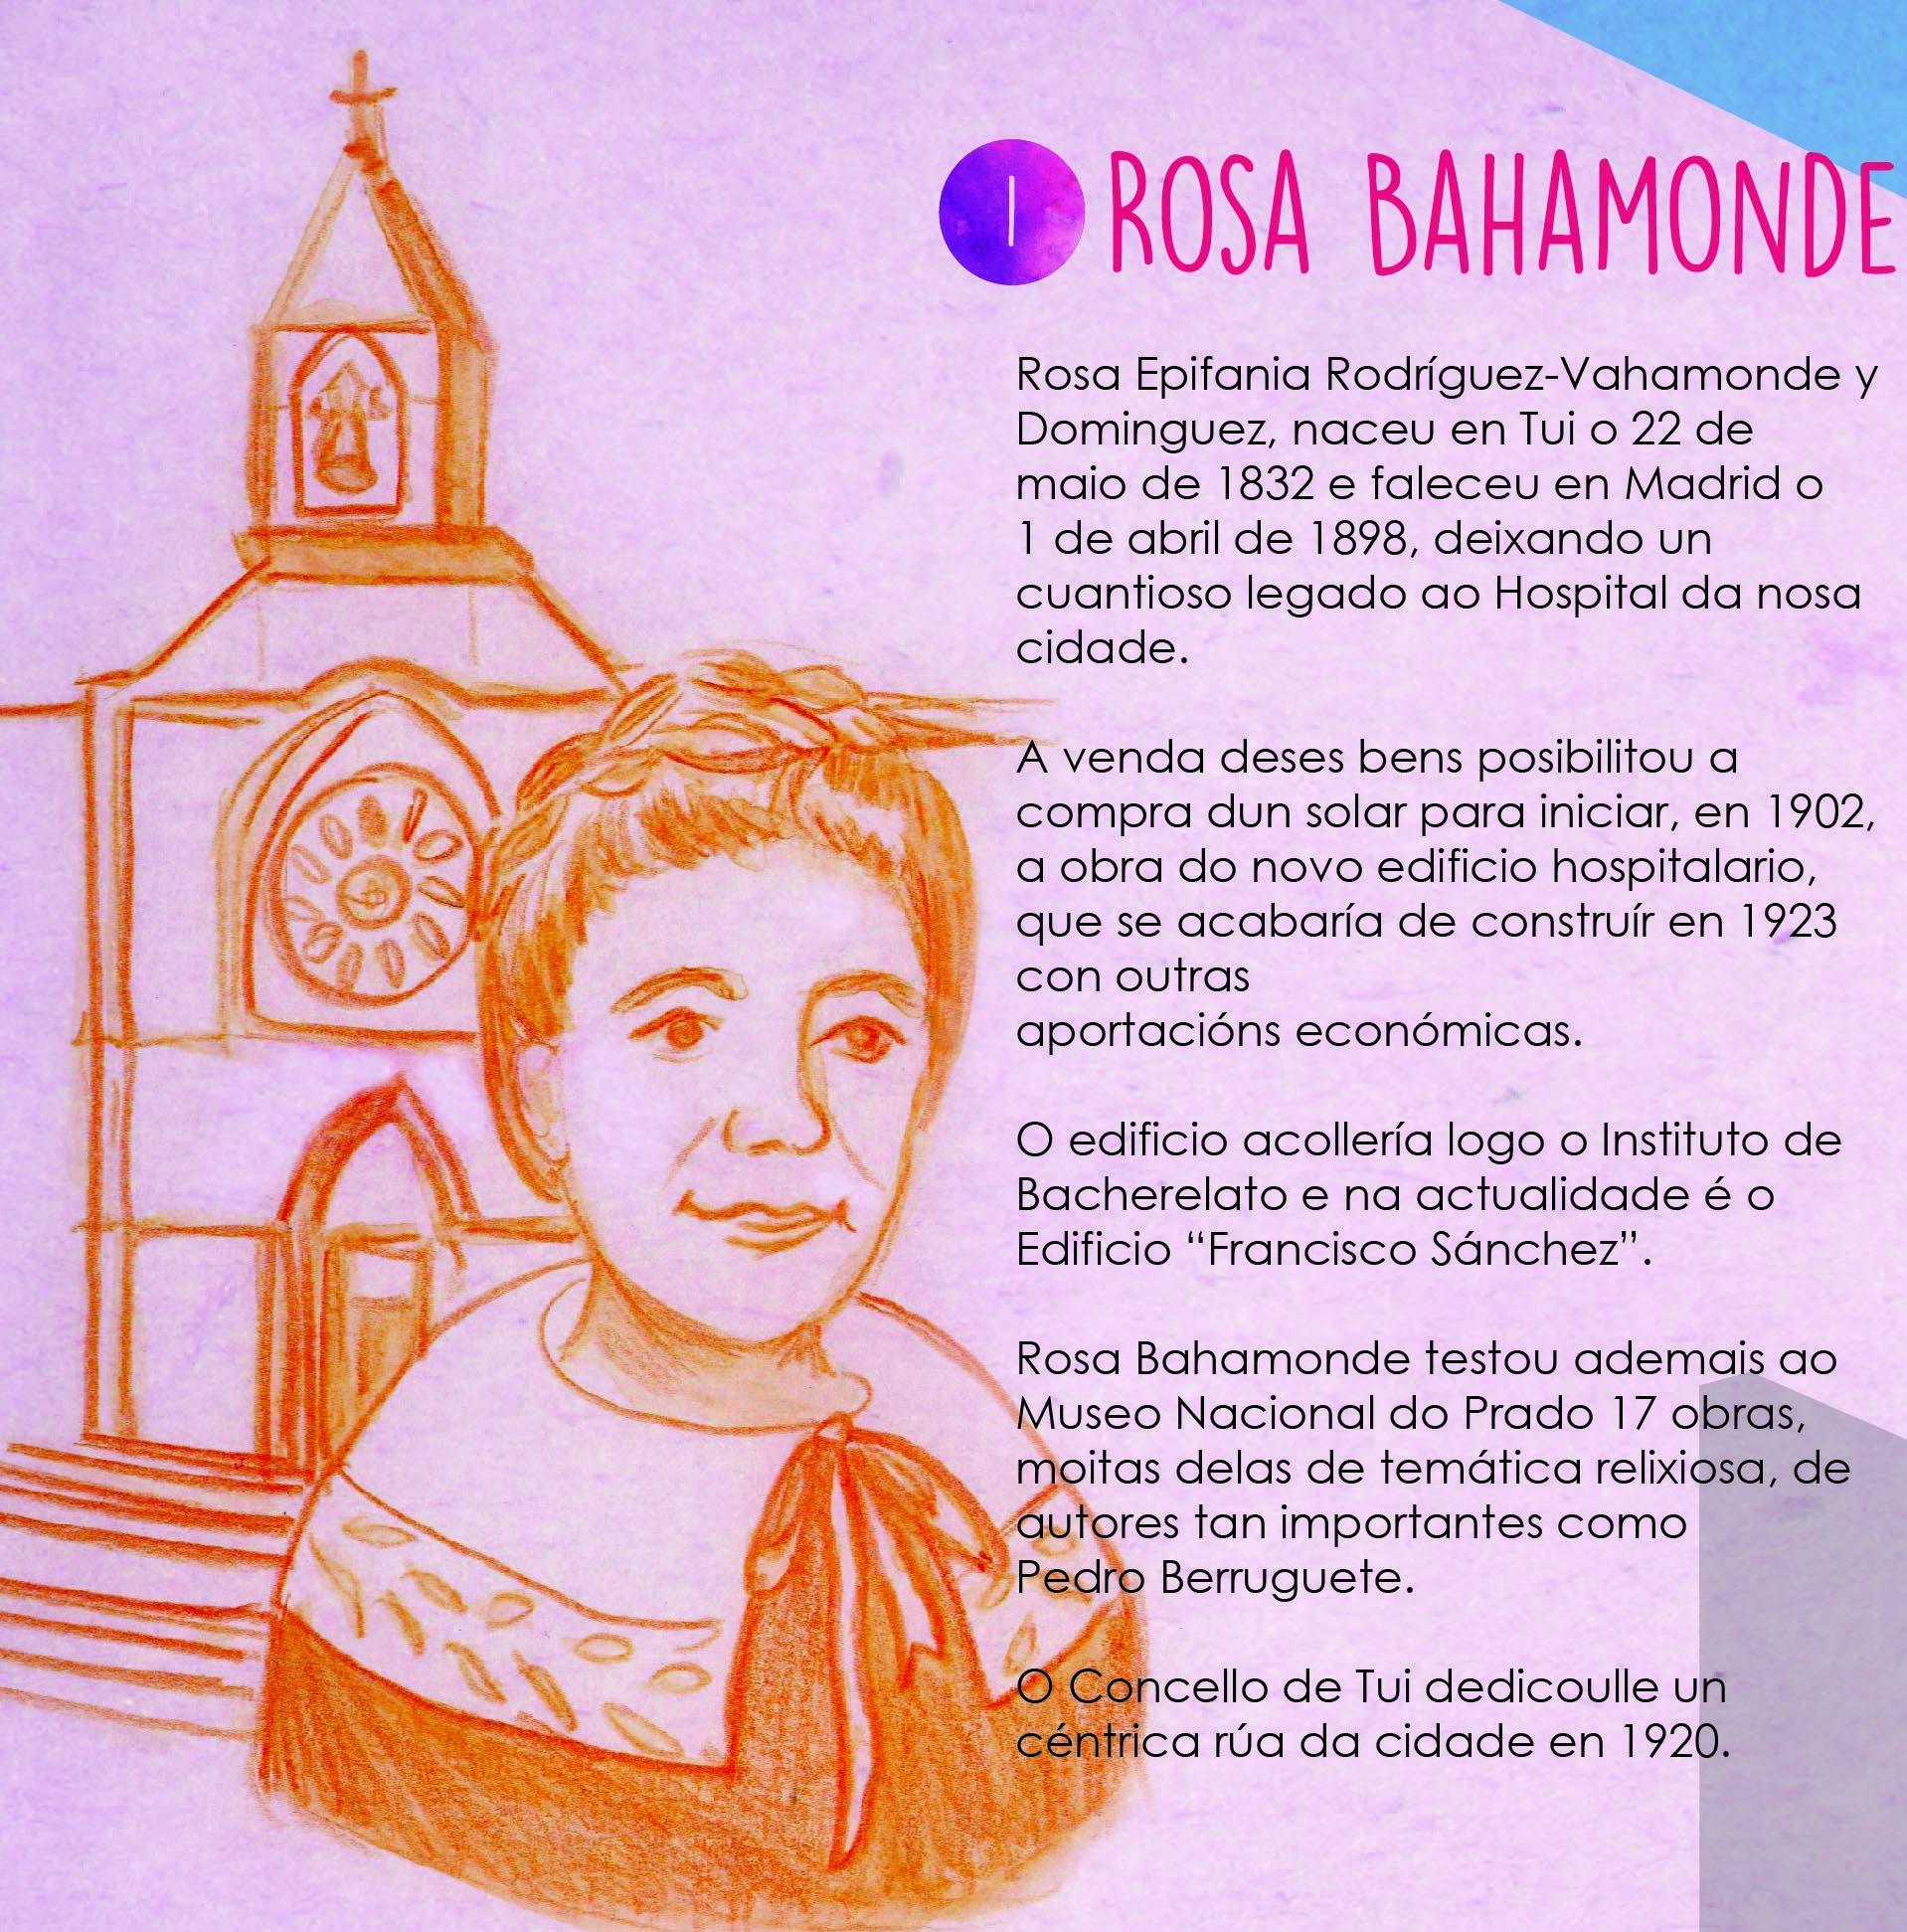 Rosa Bahamonde